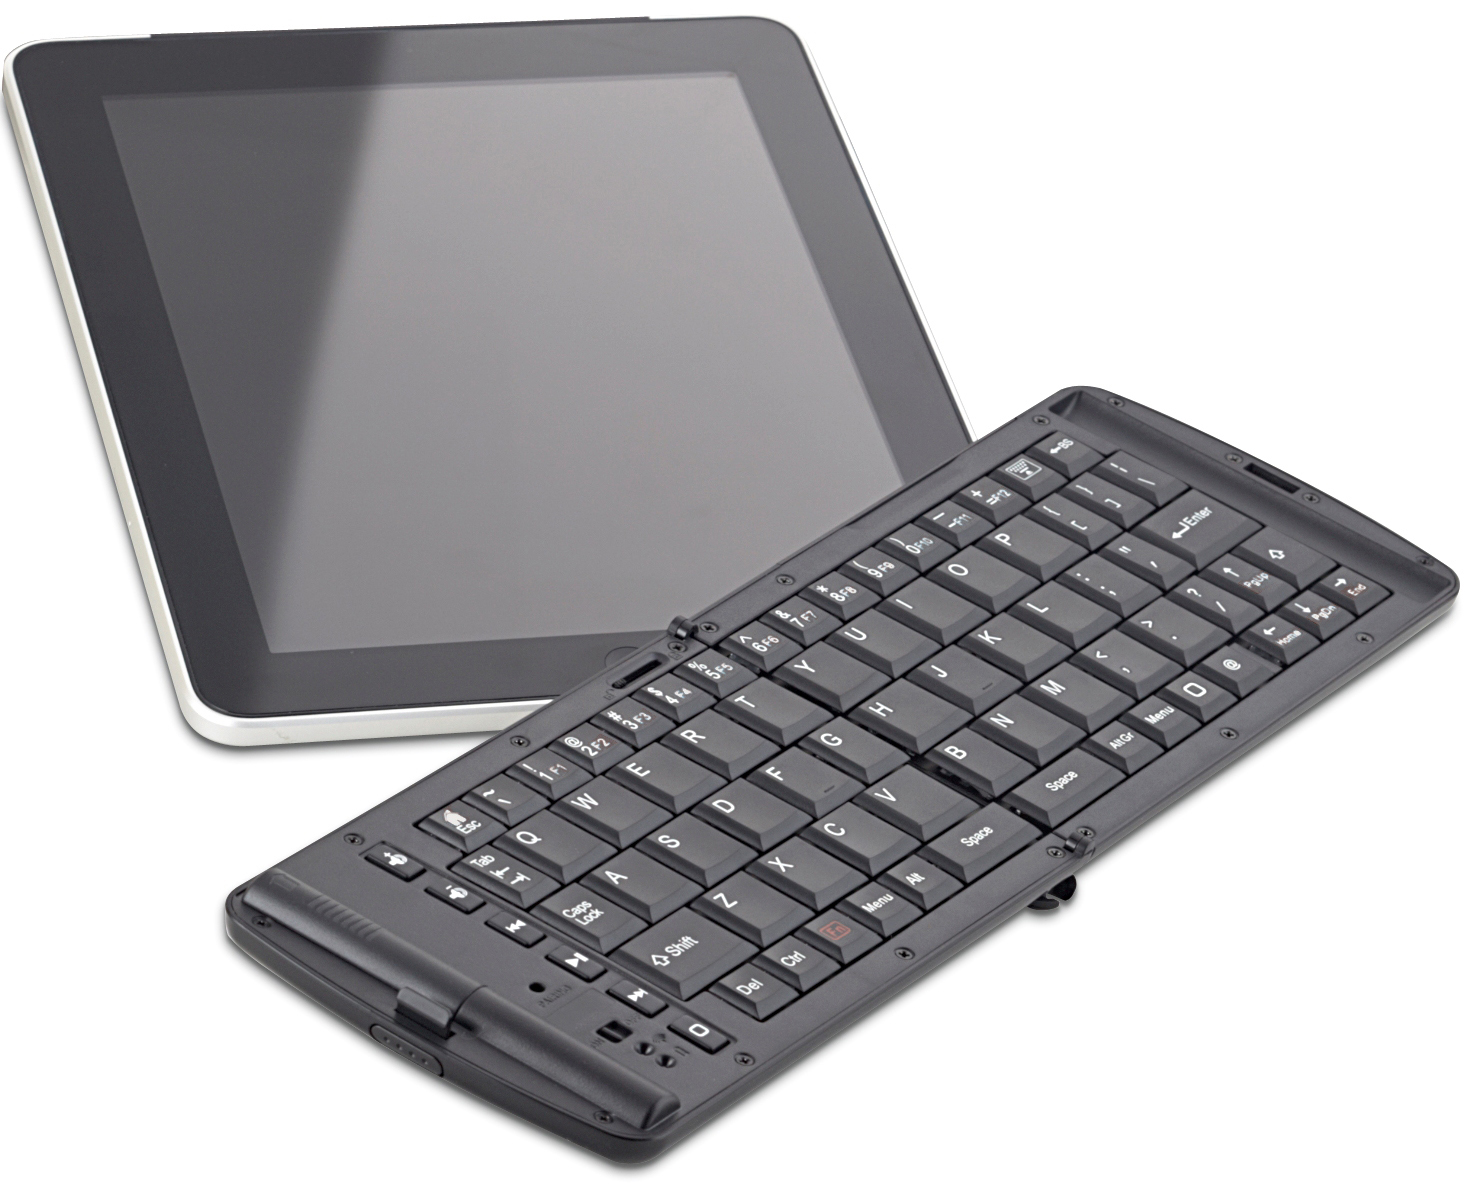 Verbatim Bluetooth Mobile Keyboard - $104.00